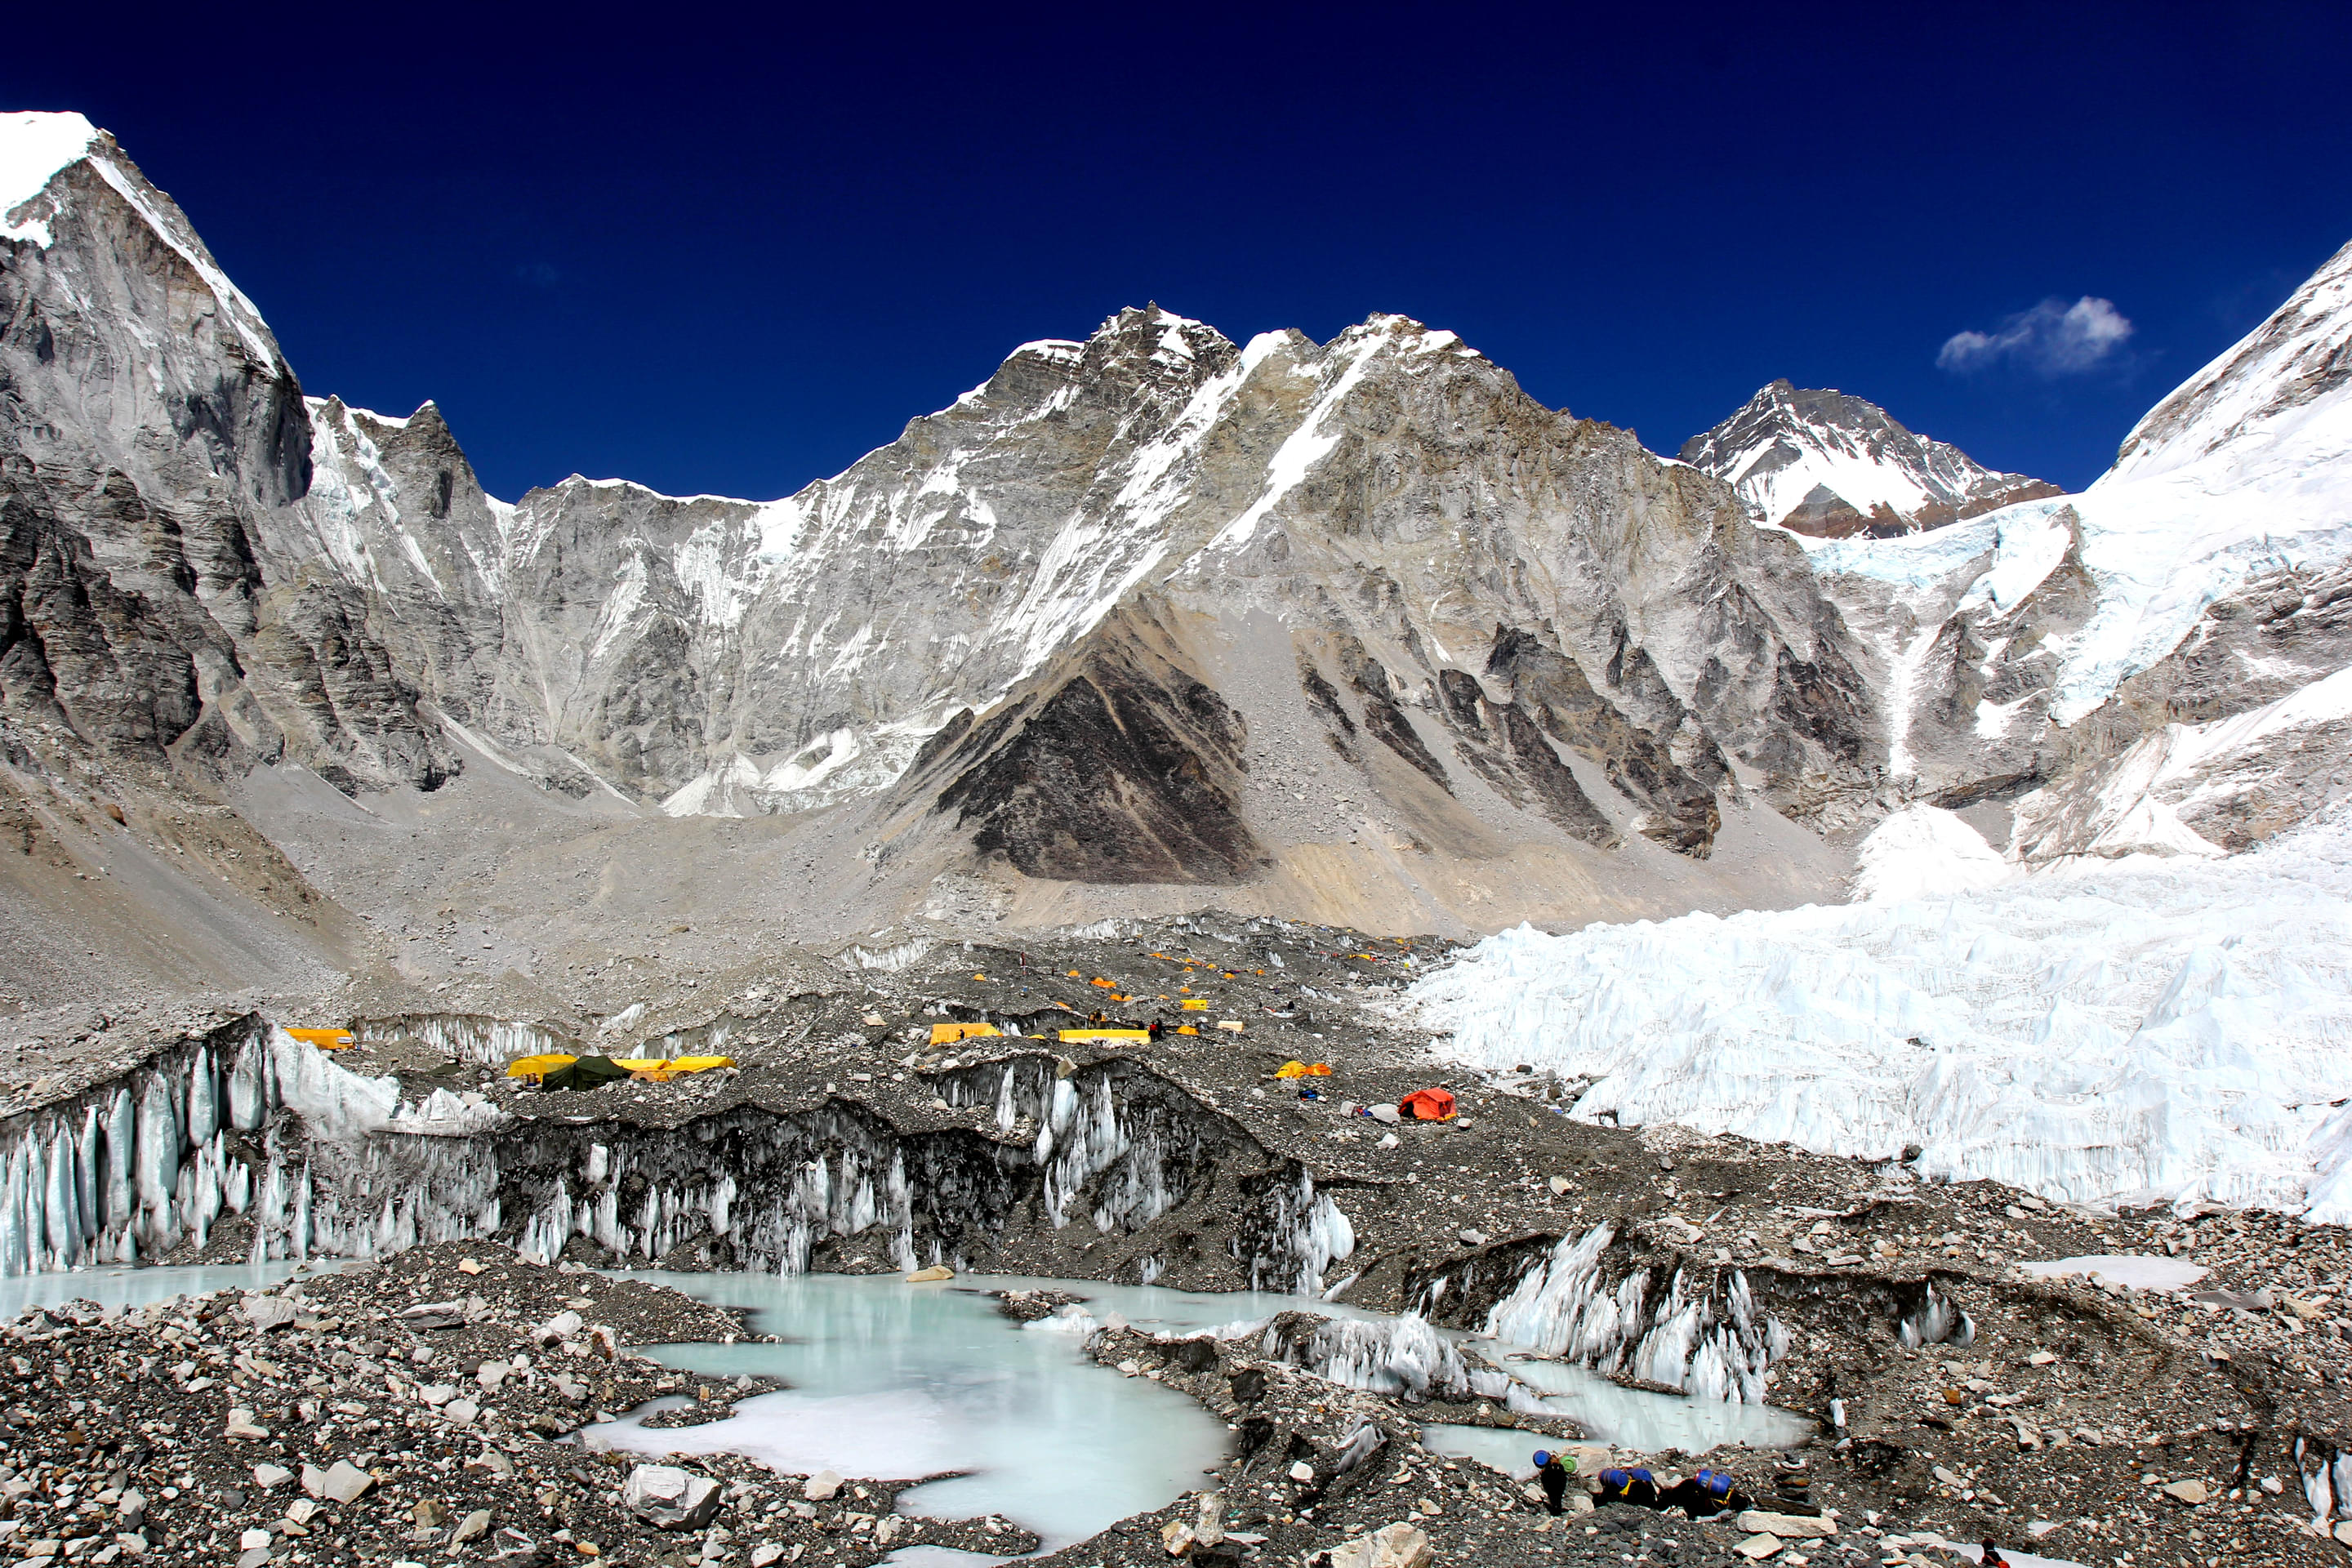 Everest Base Camp Overview